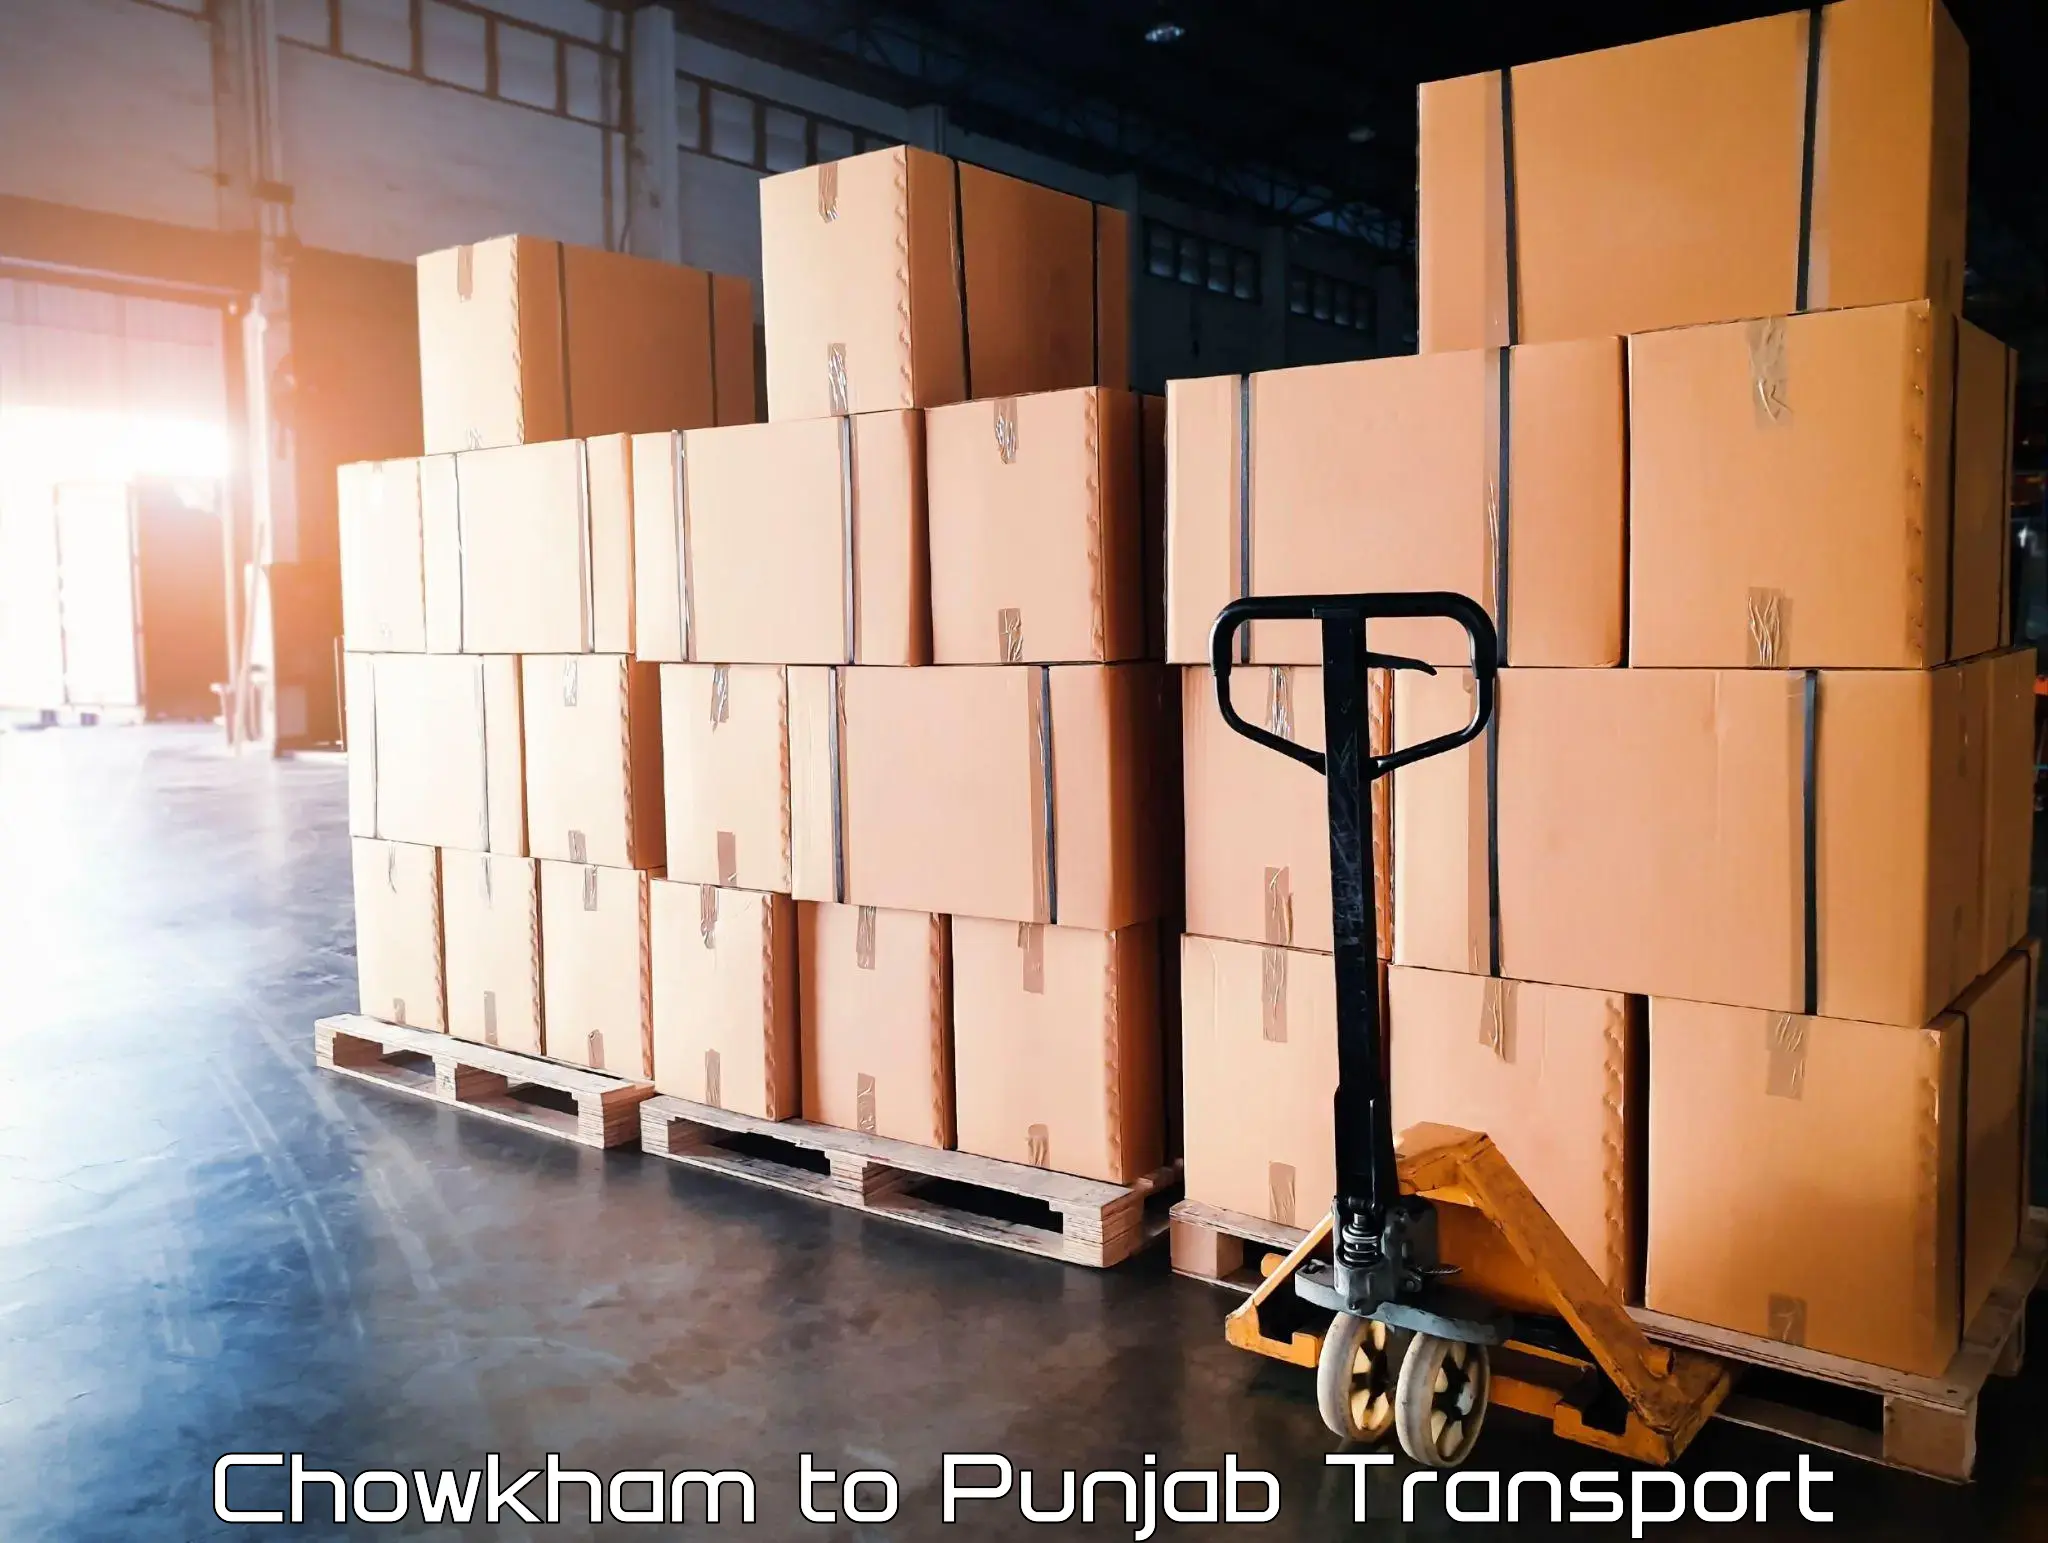 Daily transport service Chowkham to Punjab